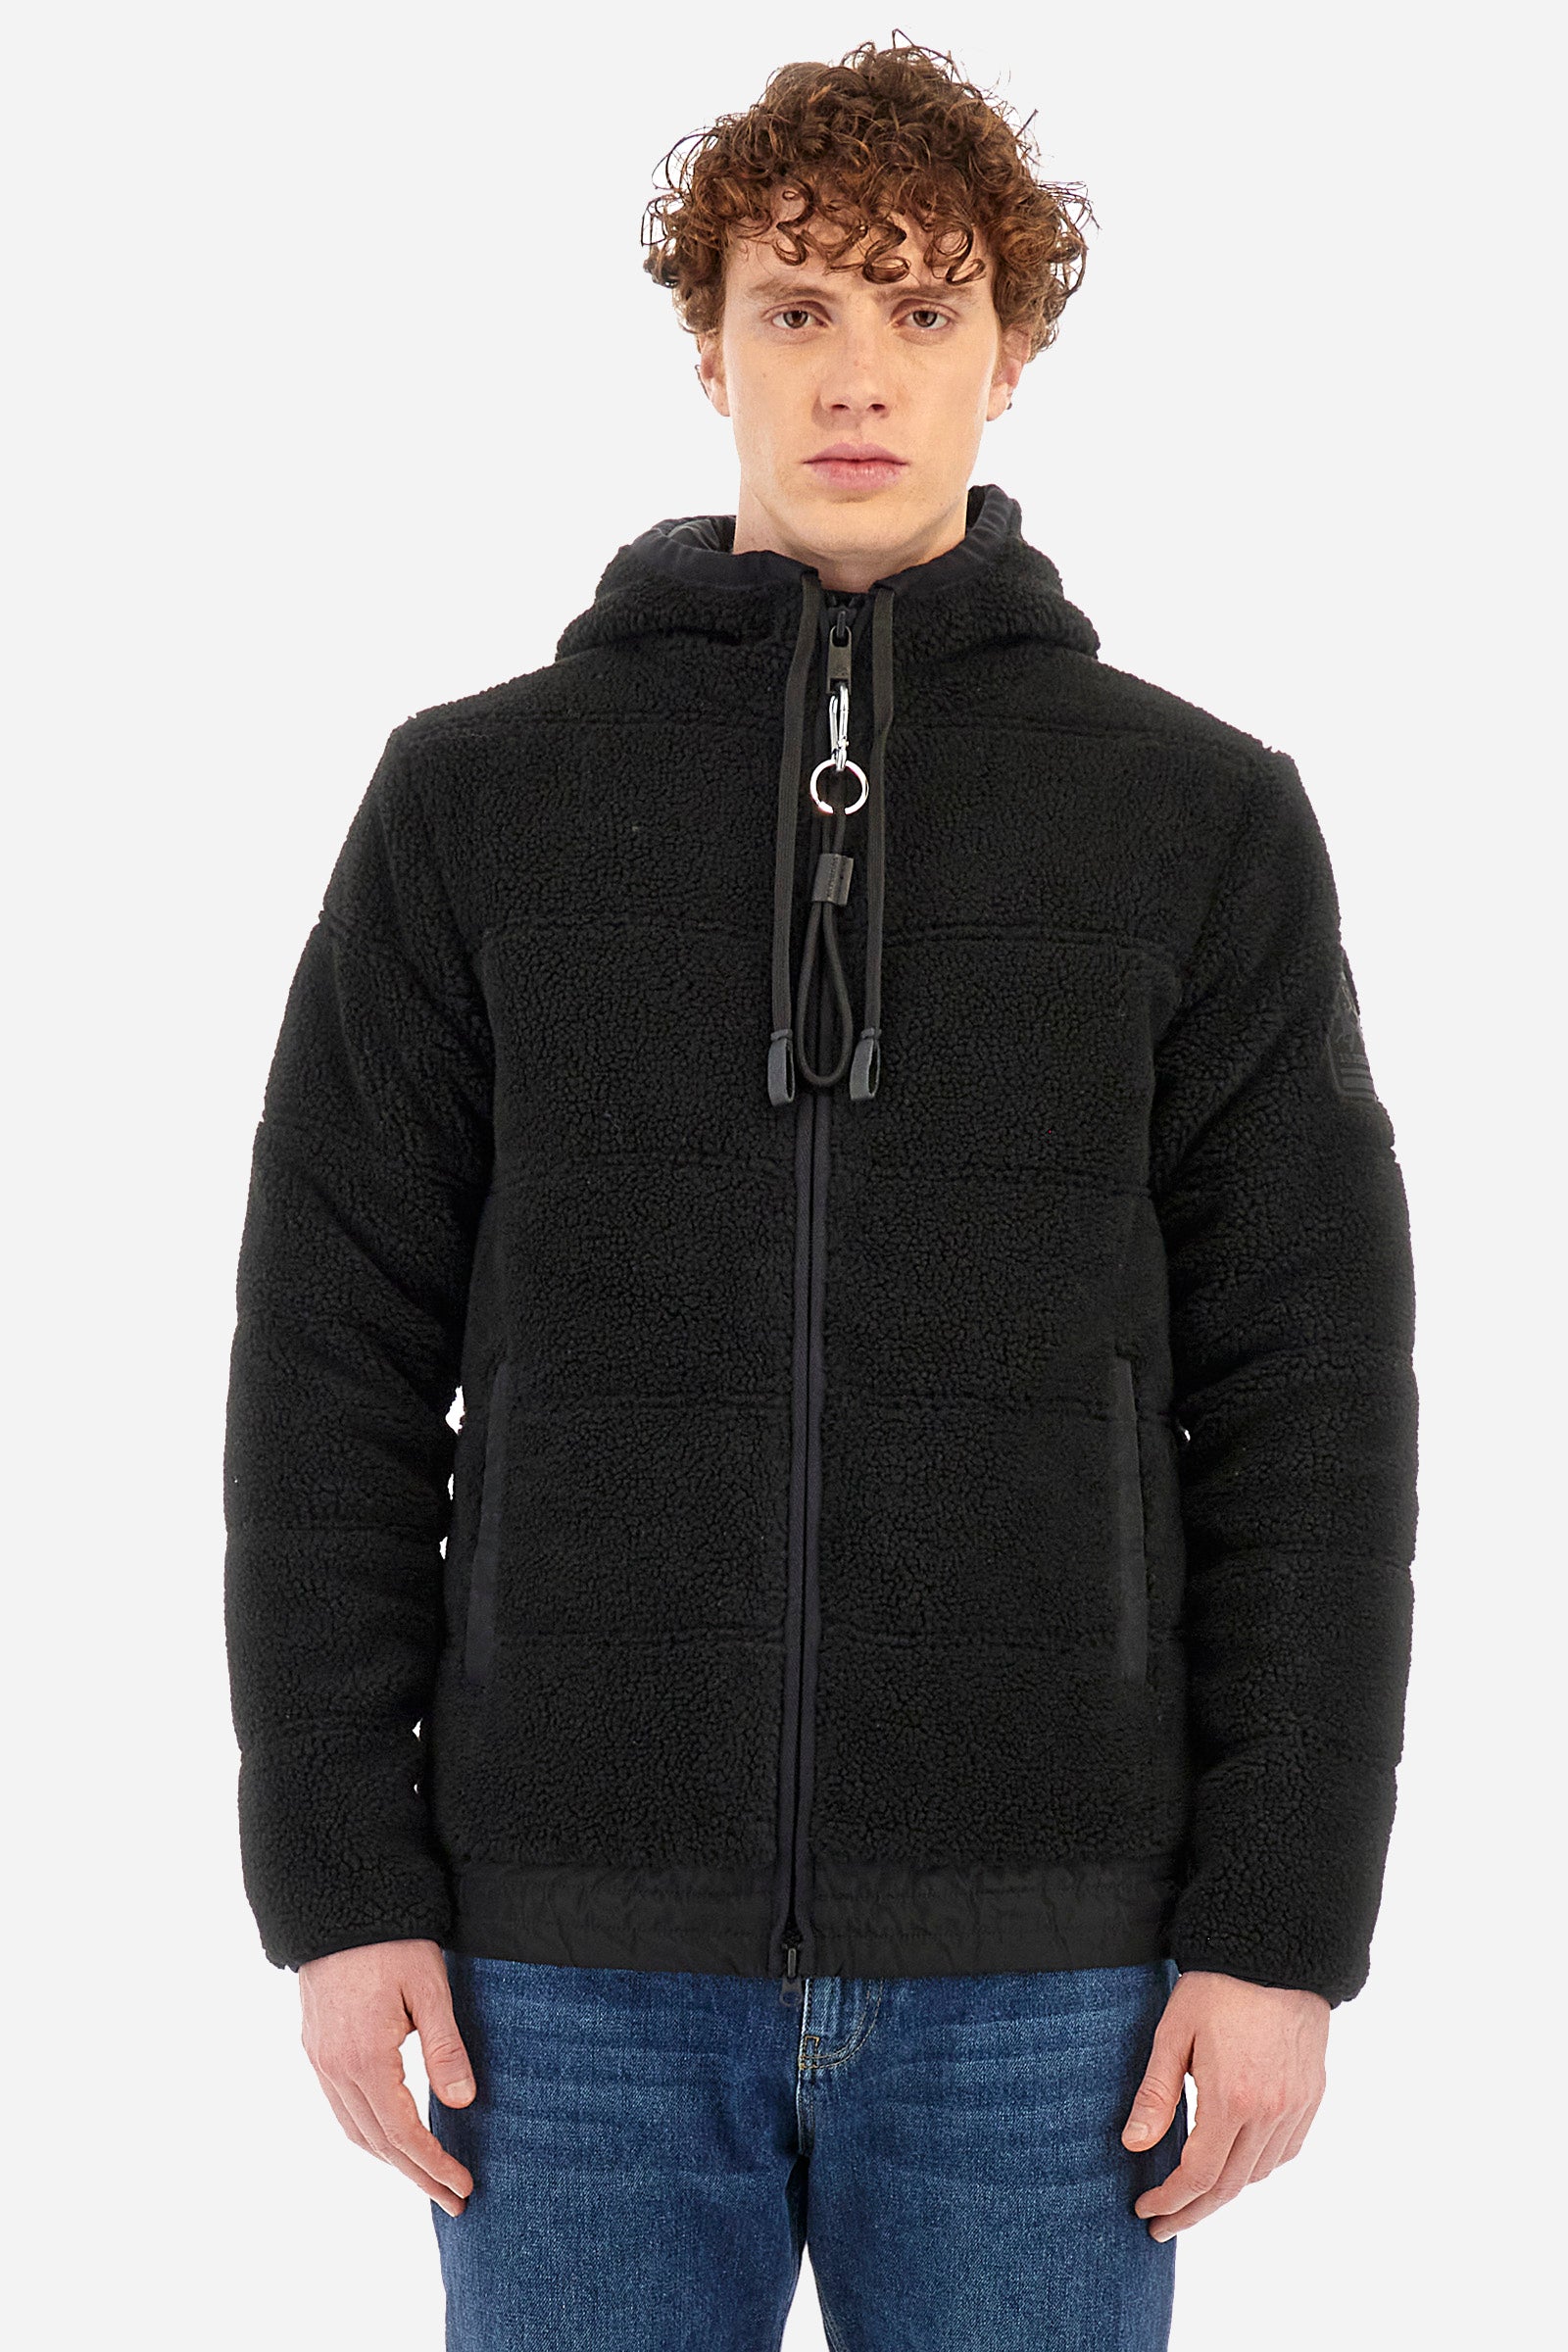 Outdoor giacca uomo regular fit - Wain - Black